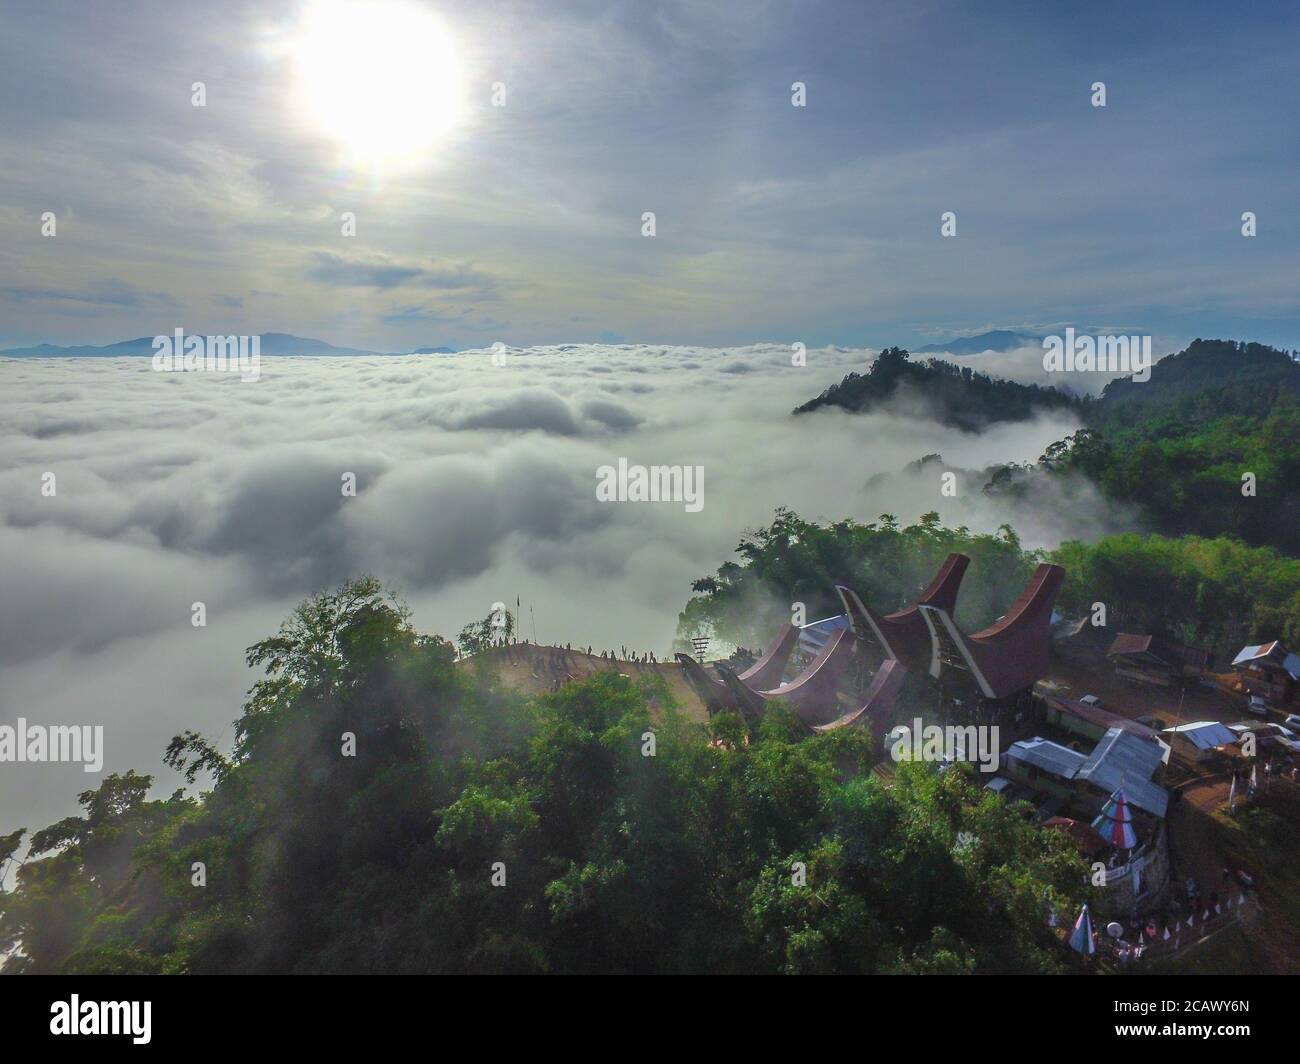 The land above the cloud, a place name Lolai Tana Toraja in South Sulawesi - Indonesia Stock Photo